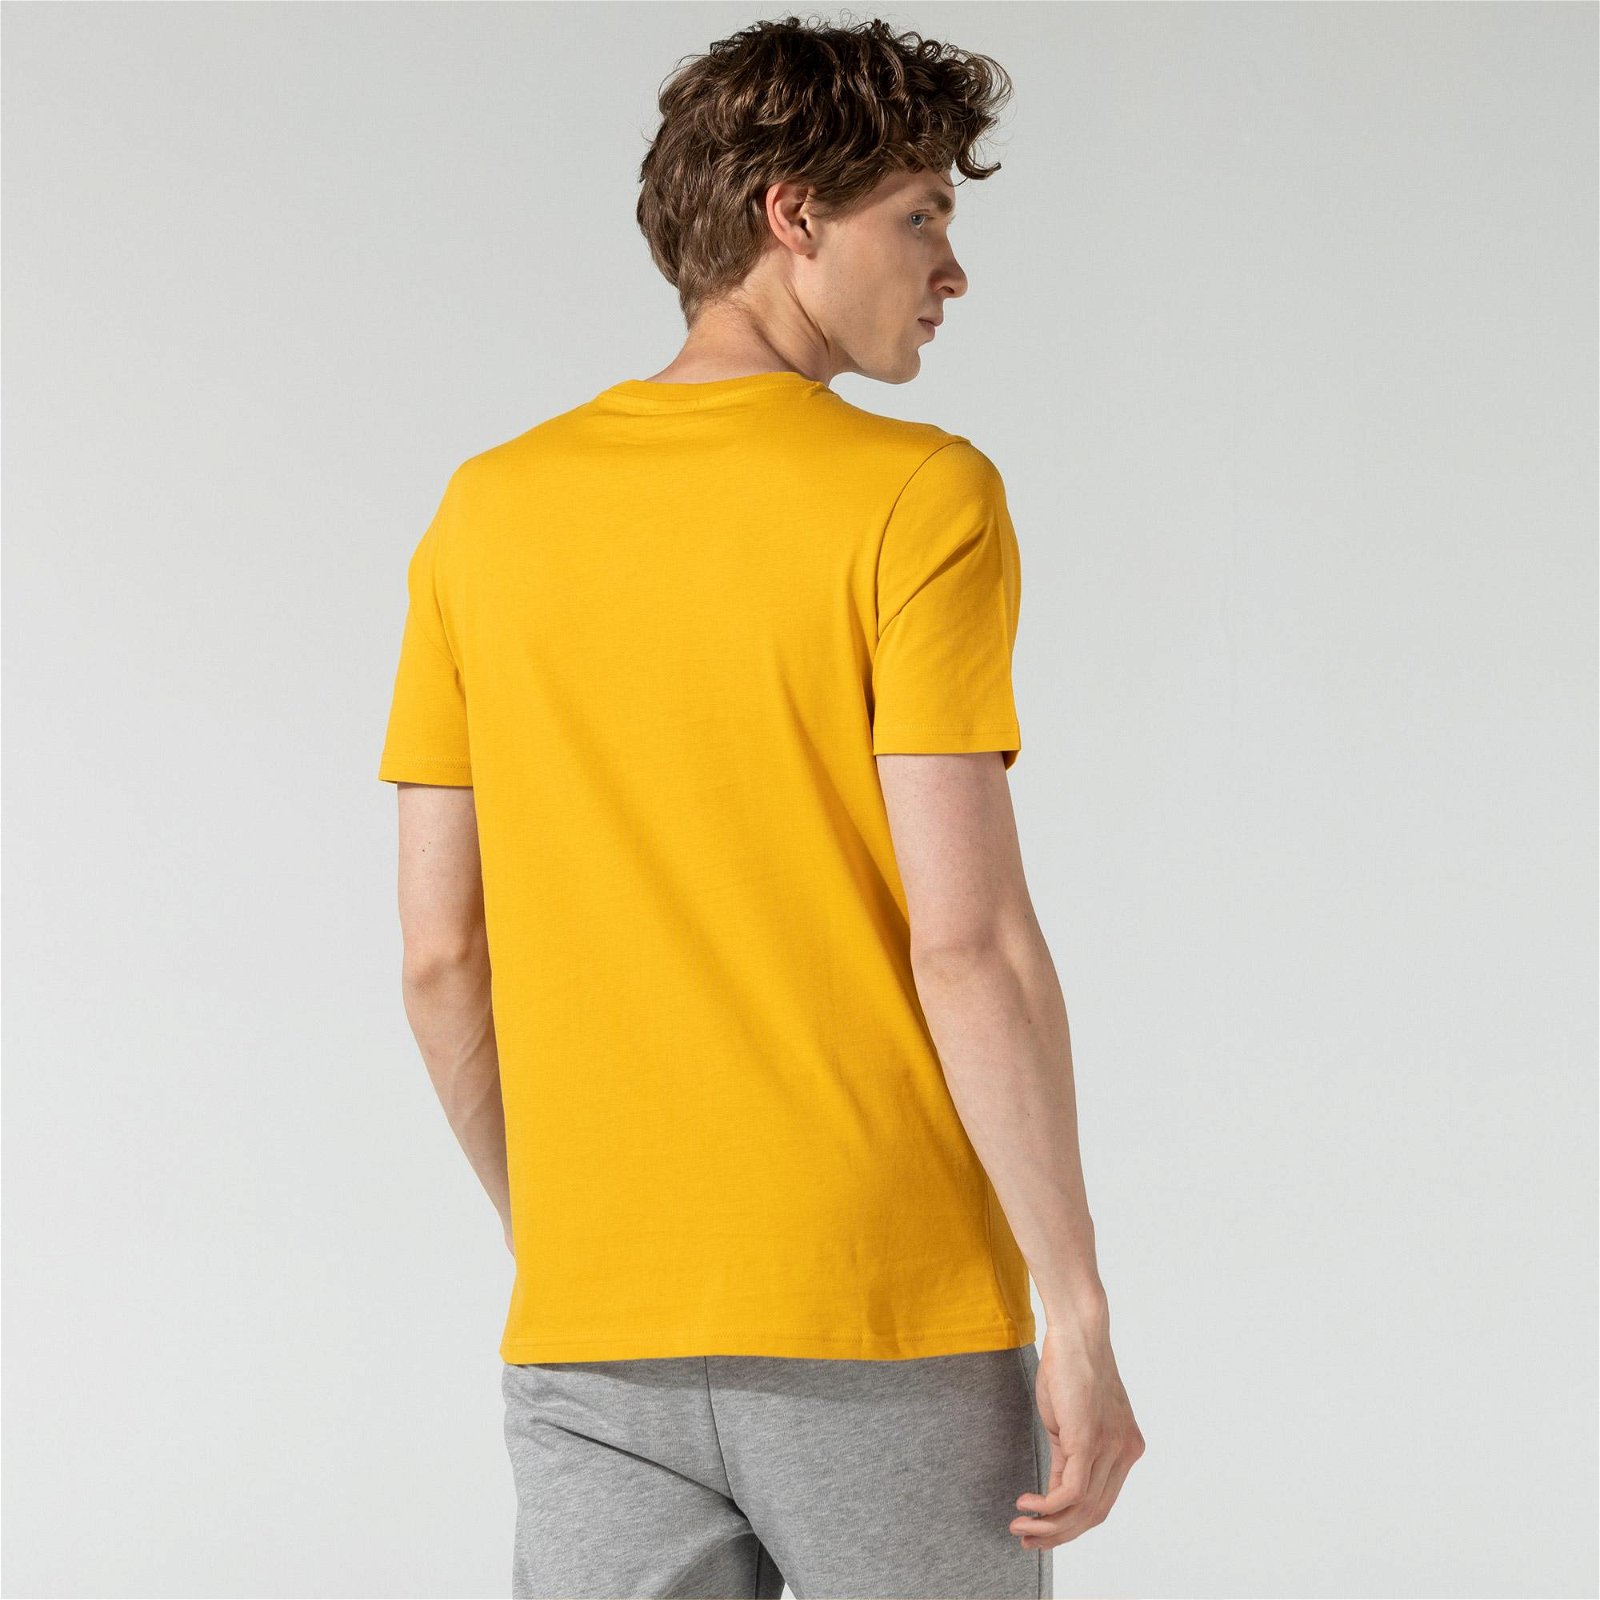 Diadora Iconic Lyf Erkek Sarı T-Shirt